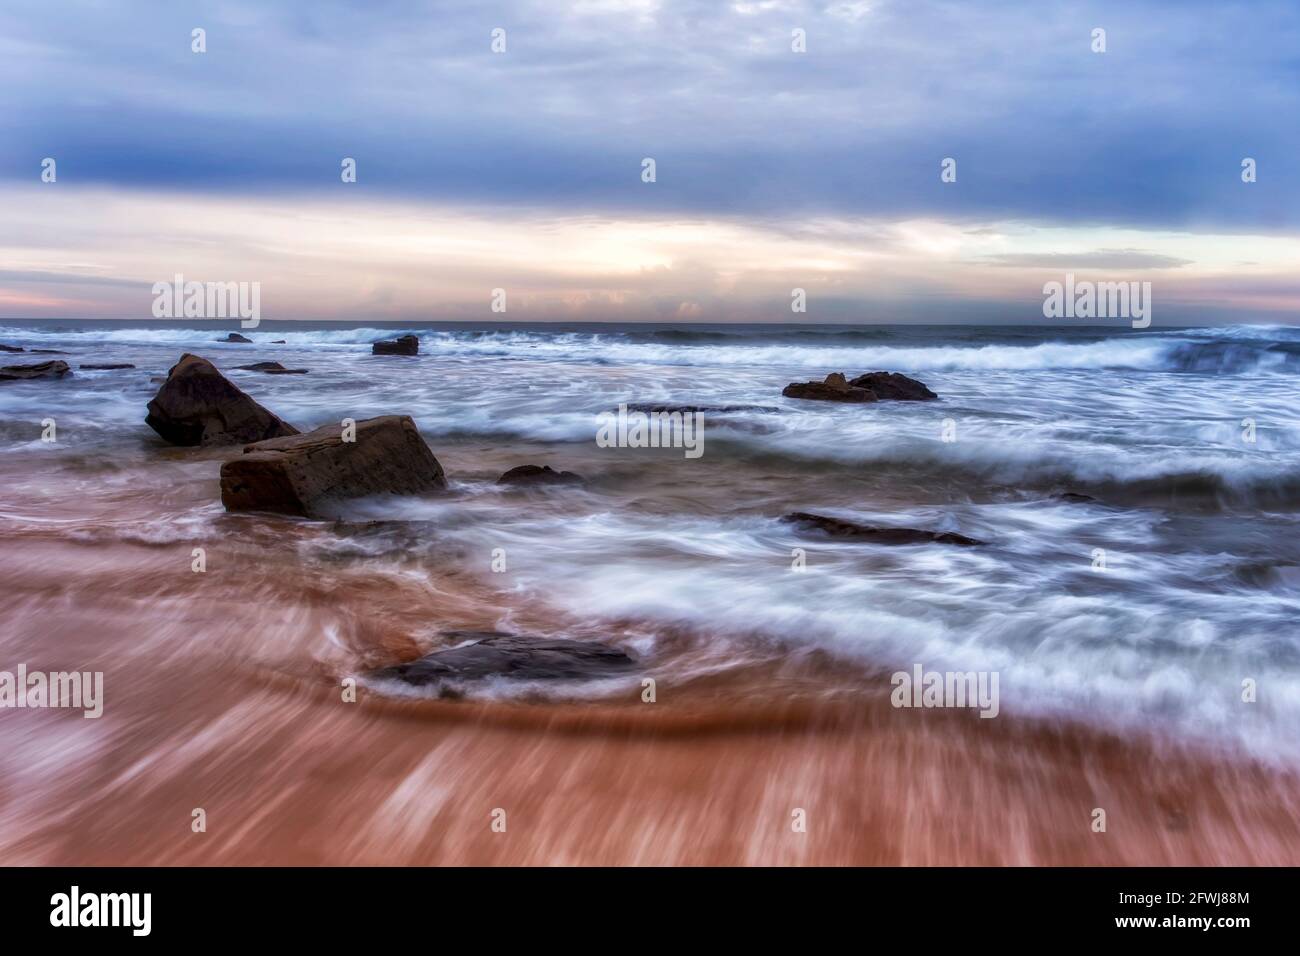 Erodierte Sandsteinfelsen am Mona-Strand von Sydney Northern Beaches at Sunrise - Scenic Seascape. Stockfoto